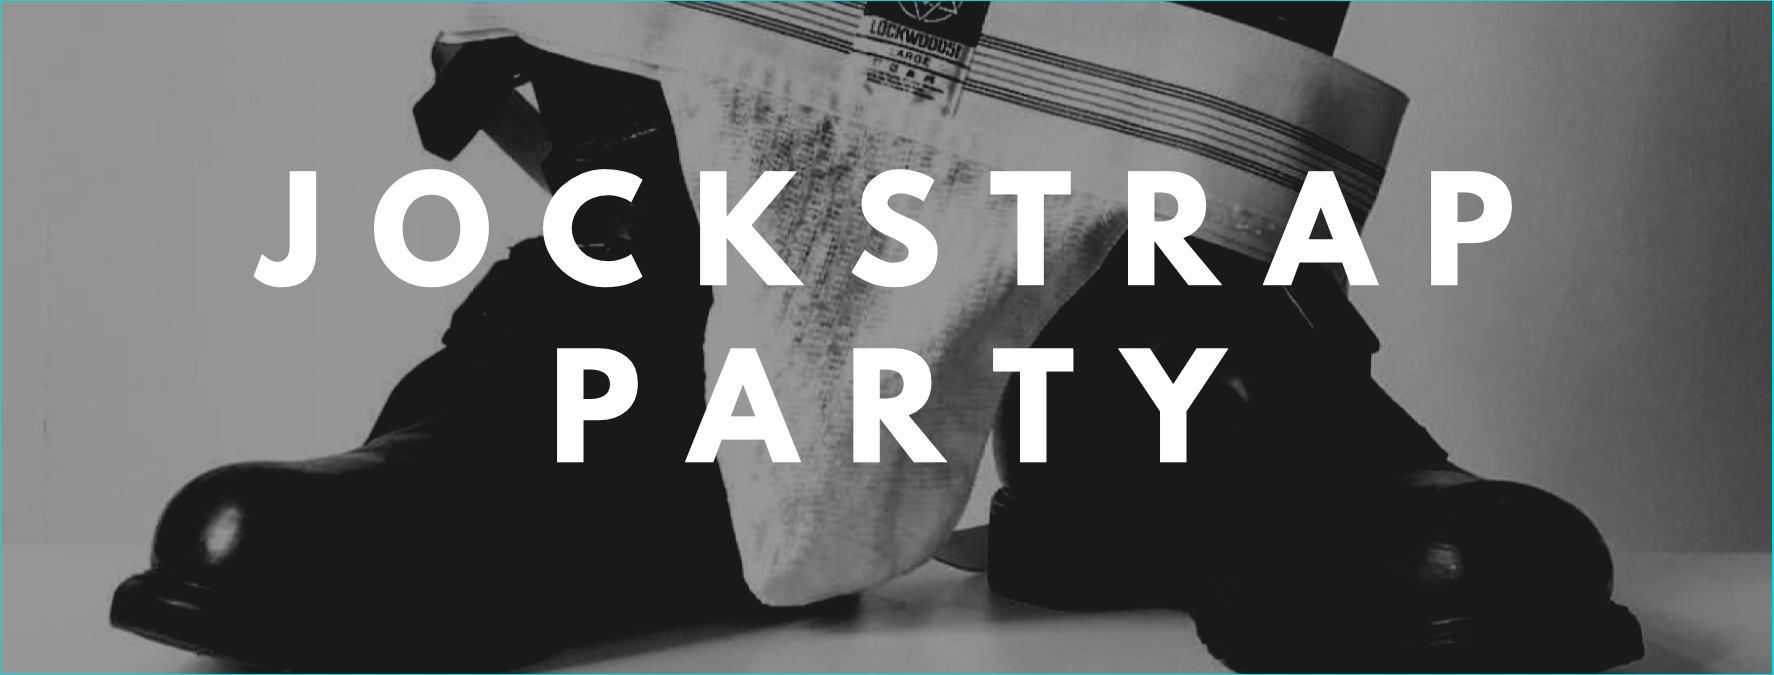 JOCKSTRAP PARTY